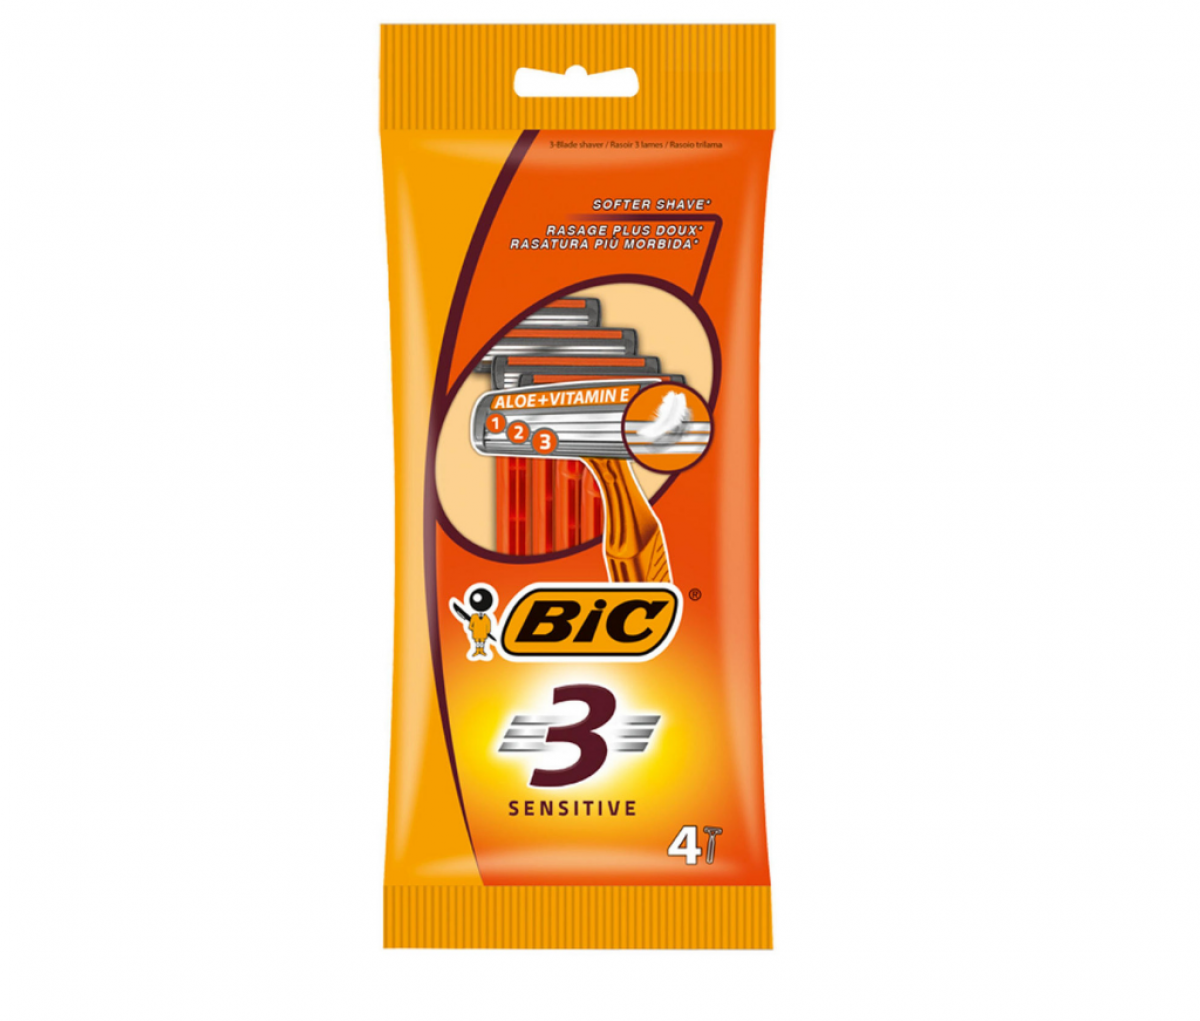 Bic Sensitive 3 1x20 Pack